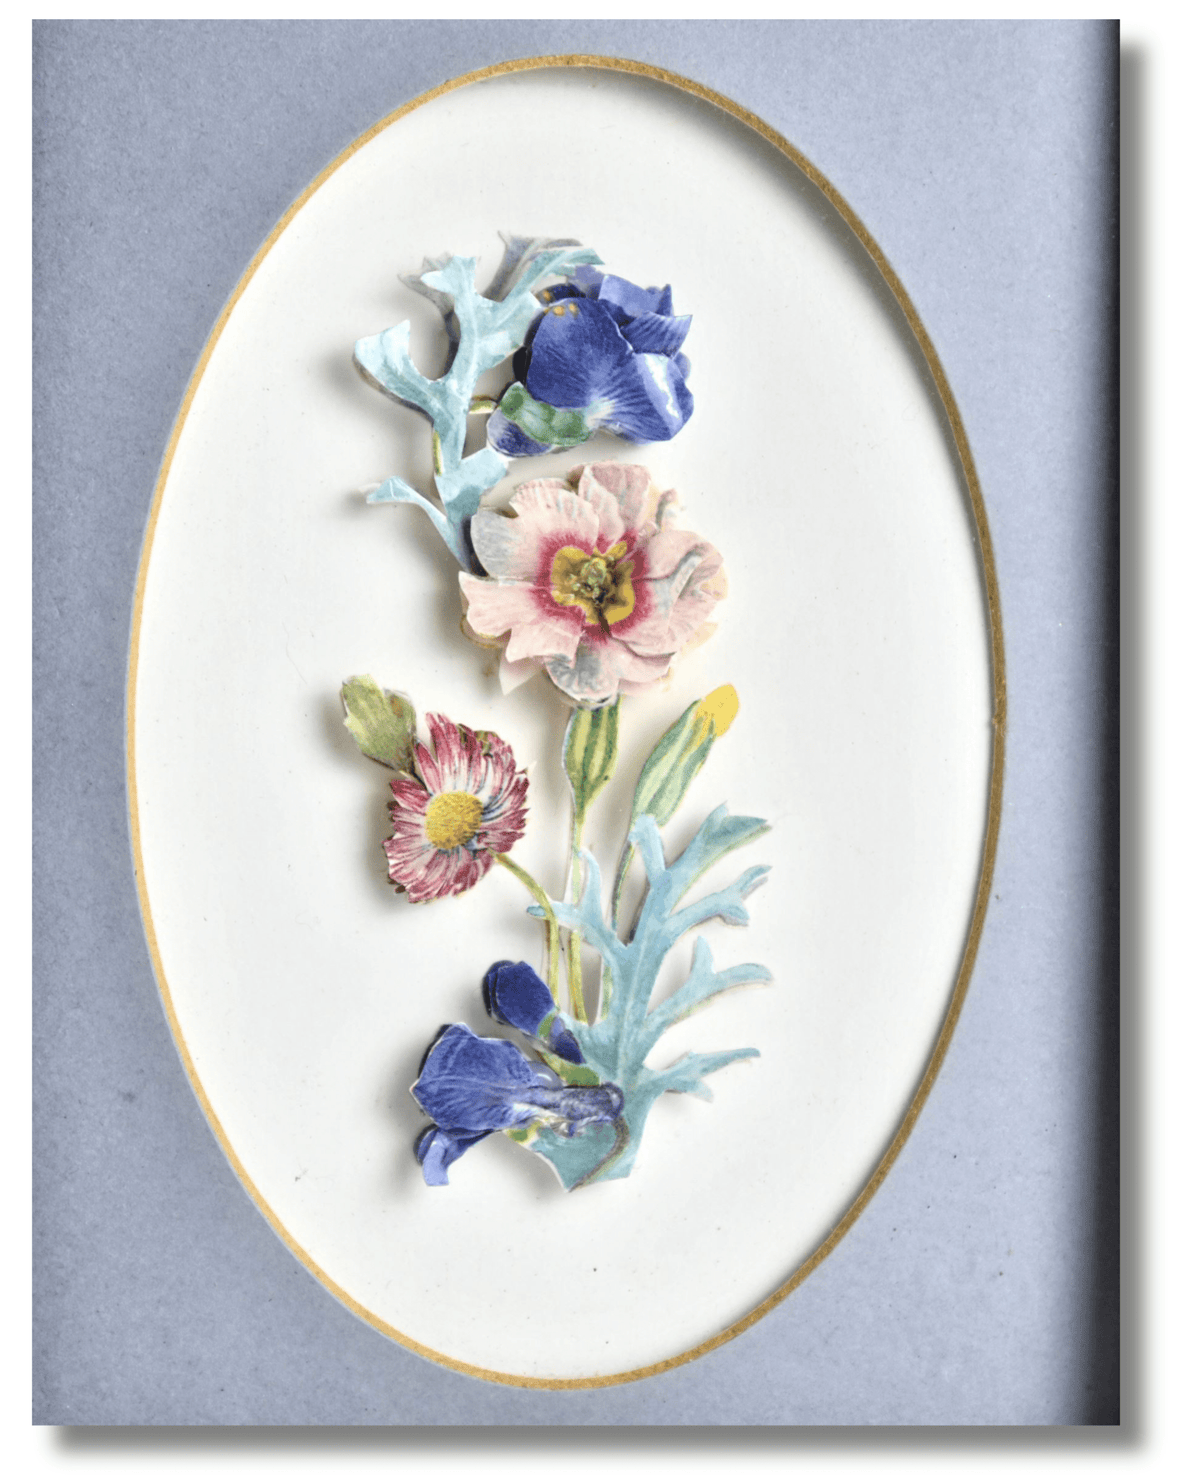 Handcrafted - Crystal Petals - Flower design - Authentic manufacturer.